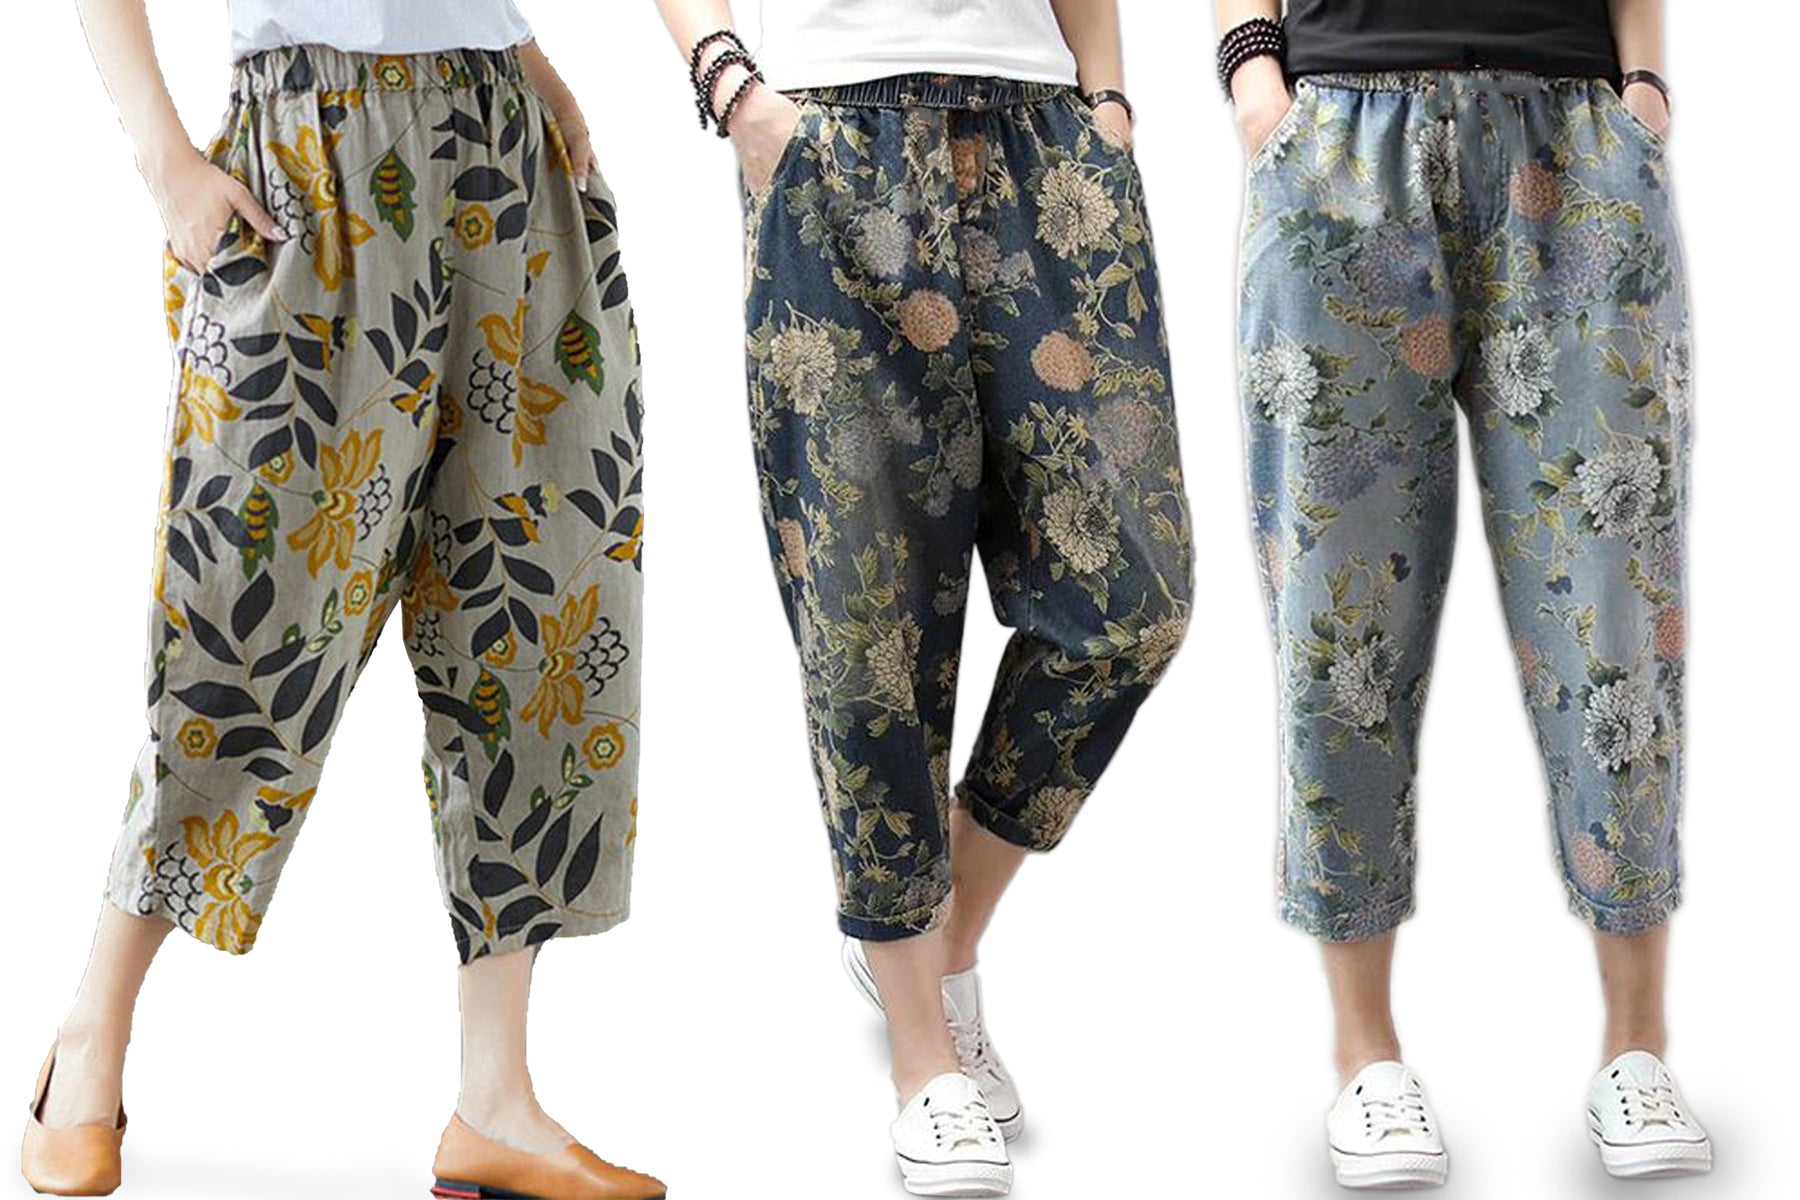 Cheibear Womens 2pcs Long Sleeve Capri Pants Floral Lounge Set